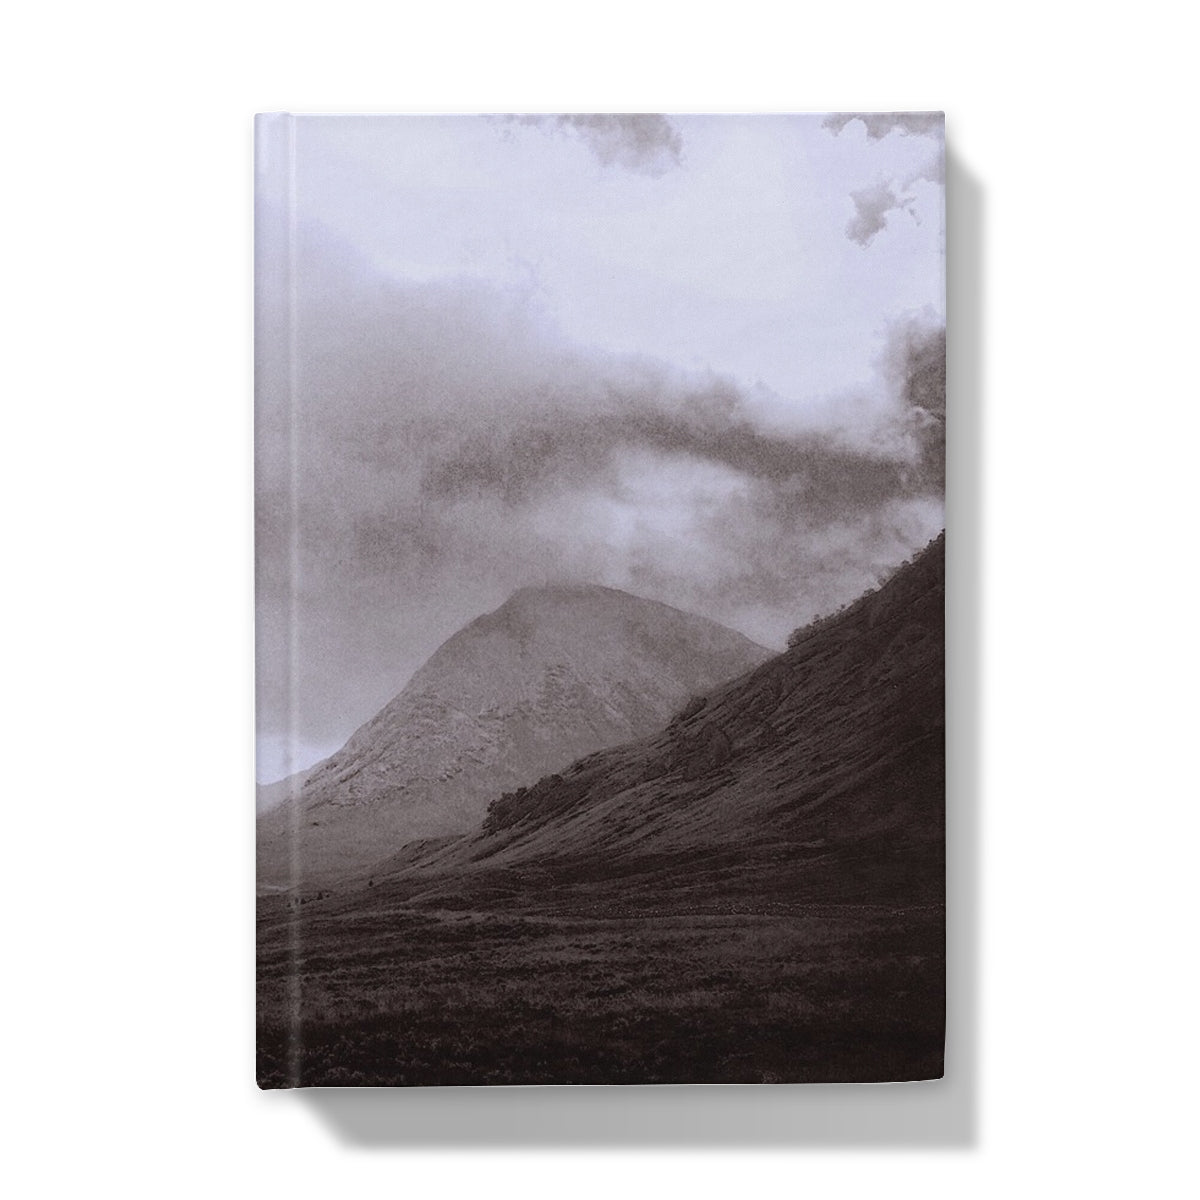 Glencoe Mist Art Gifts Hardback Journal-Journals & Notebooks-Glencoe Art Gallery-A4-Lined-Paintings, Prints, Homeware, Art Gifts From Scotland By Scottish Artist Kevin Hunter